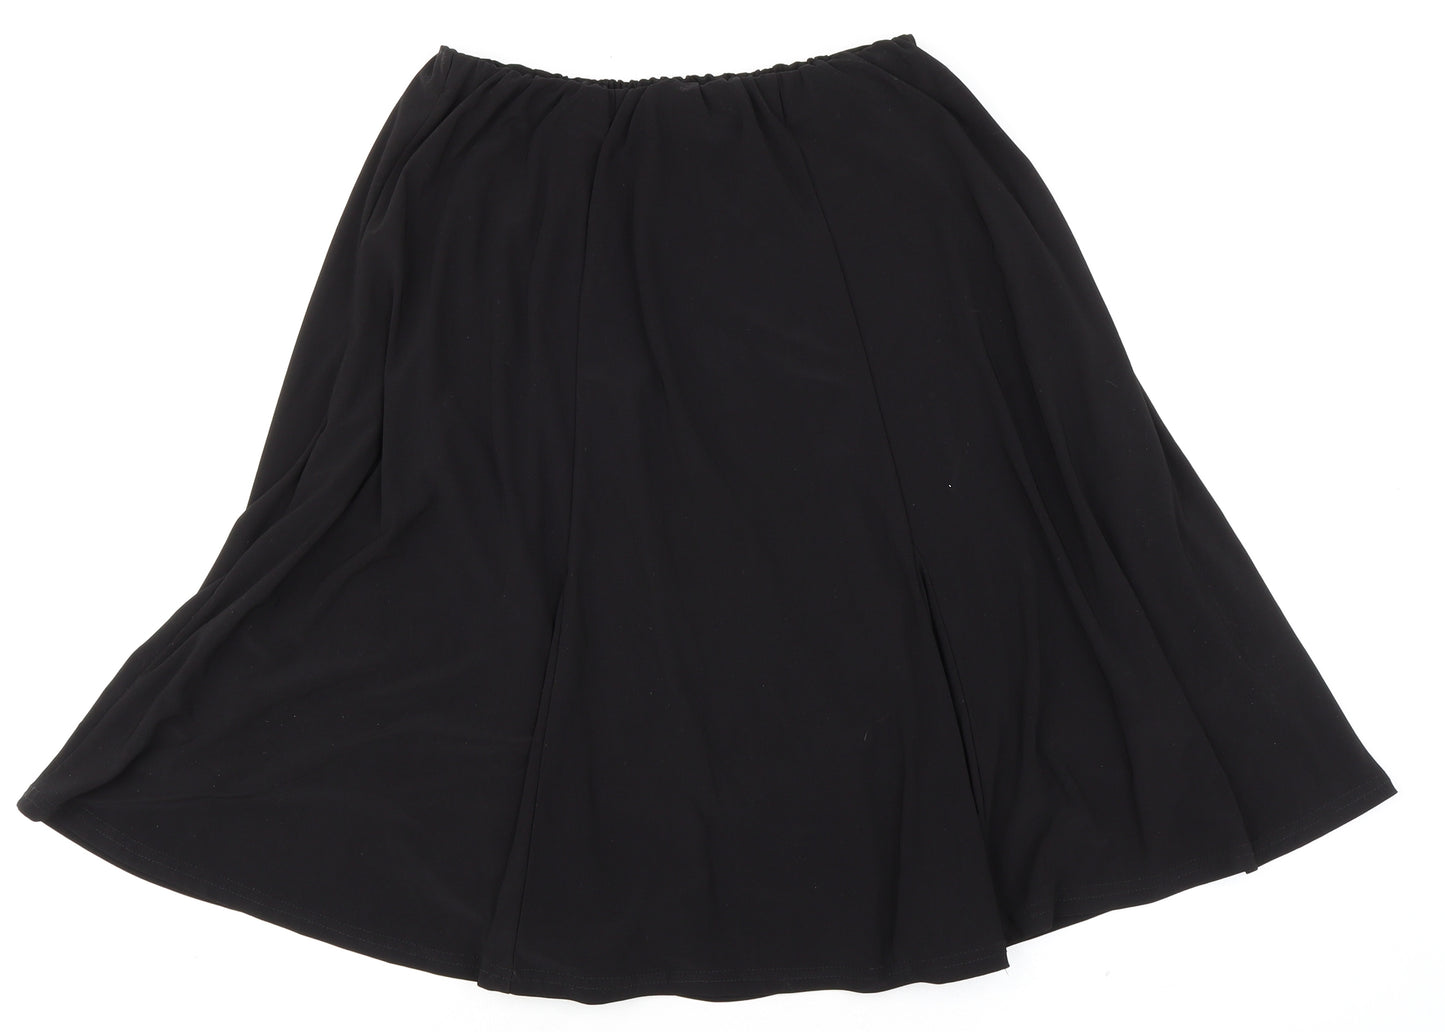 Amber Womens Black Polyester Swing Skirt Size 16 - Size 16-18